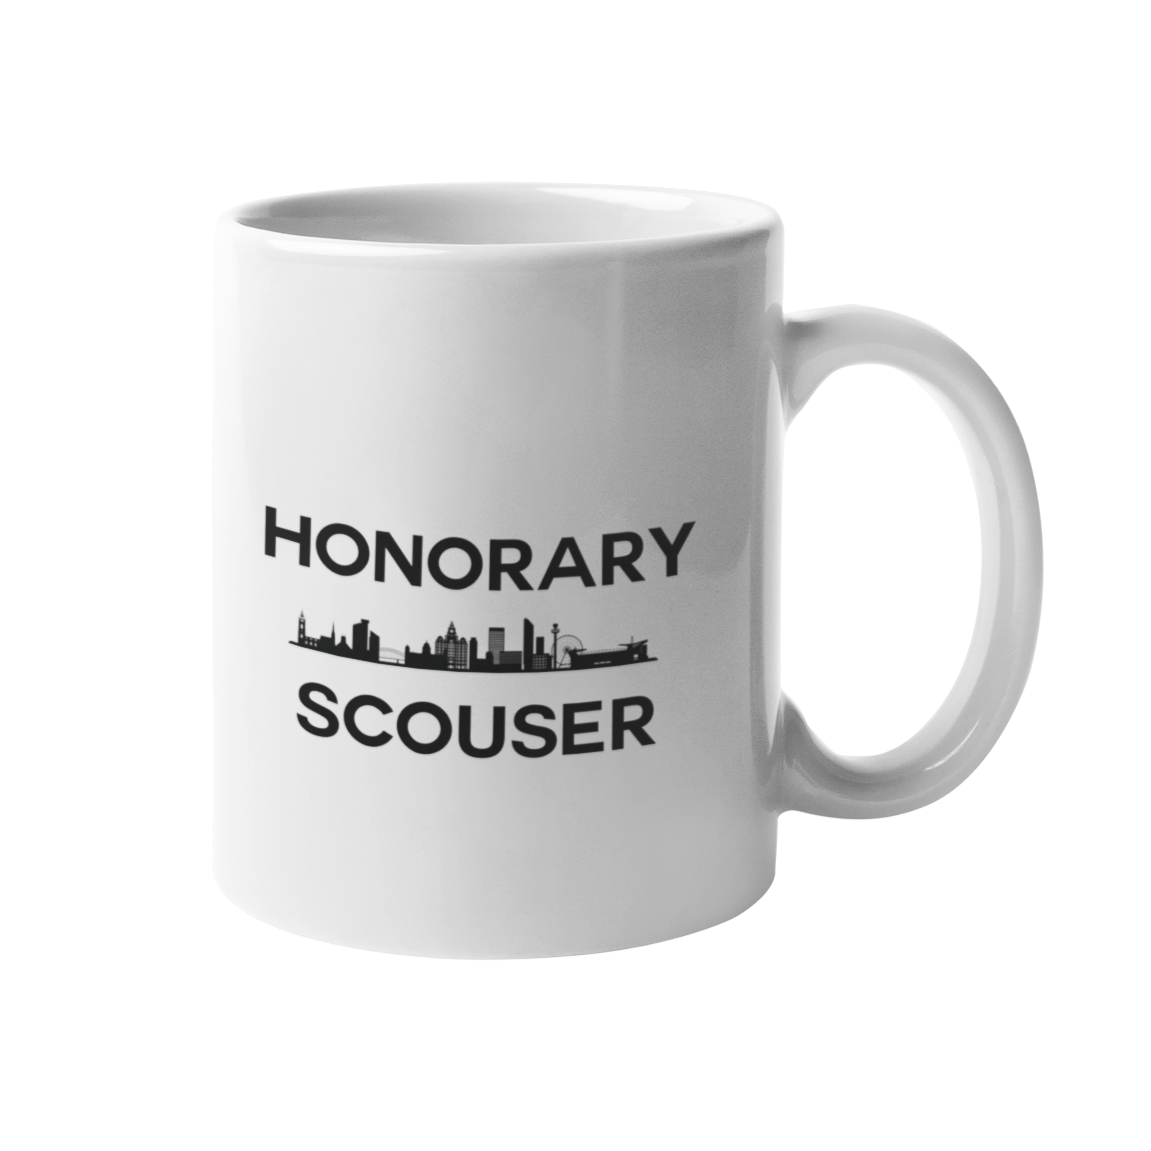 Honorary Scouser Mug